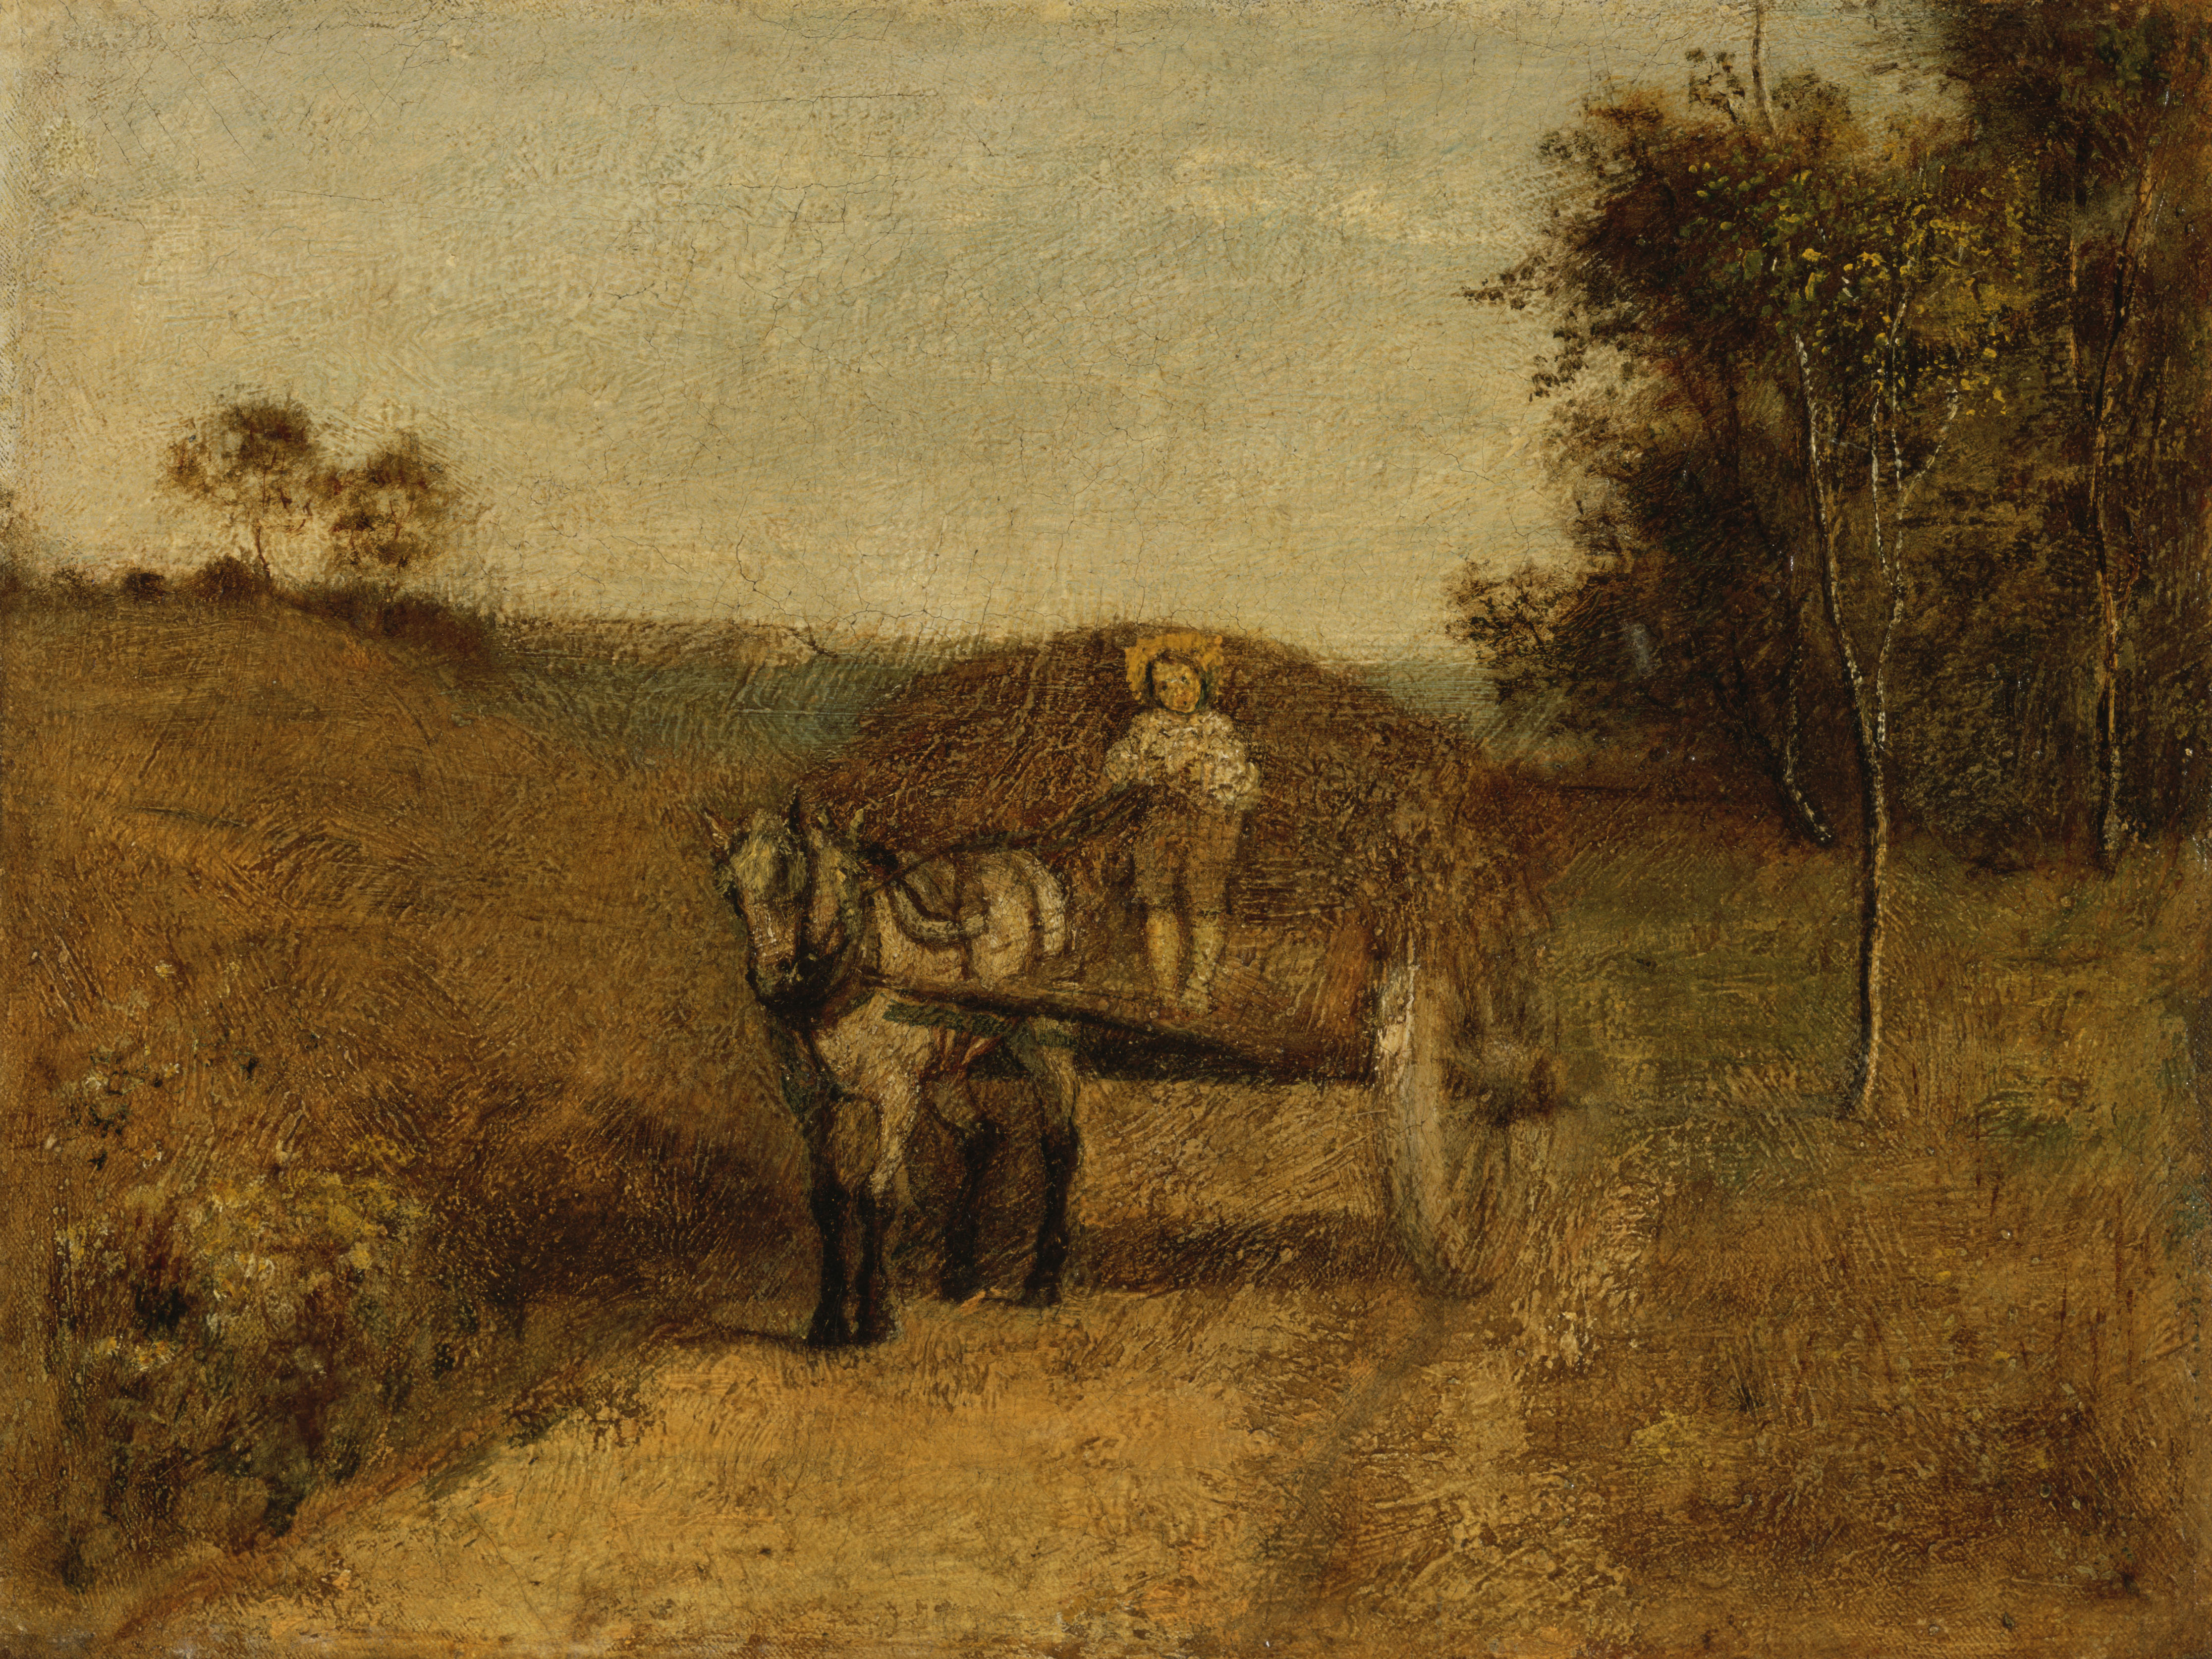 Boy Driving a Wagon by Albert Pinkham Ryder